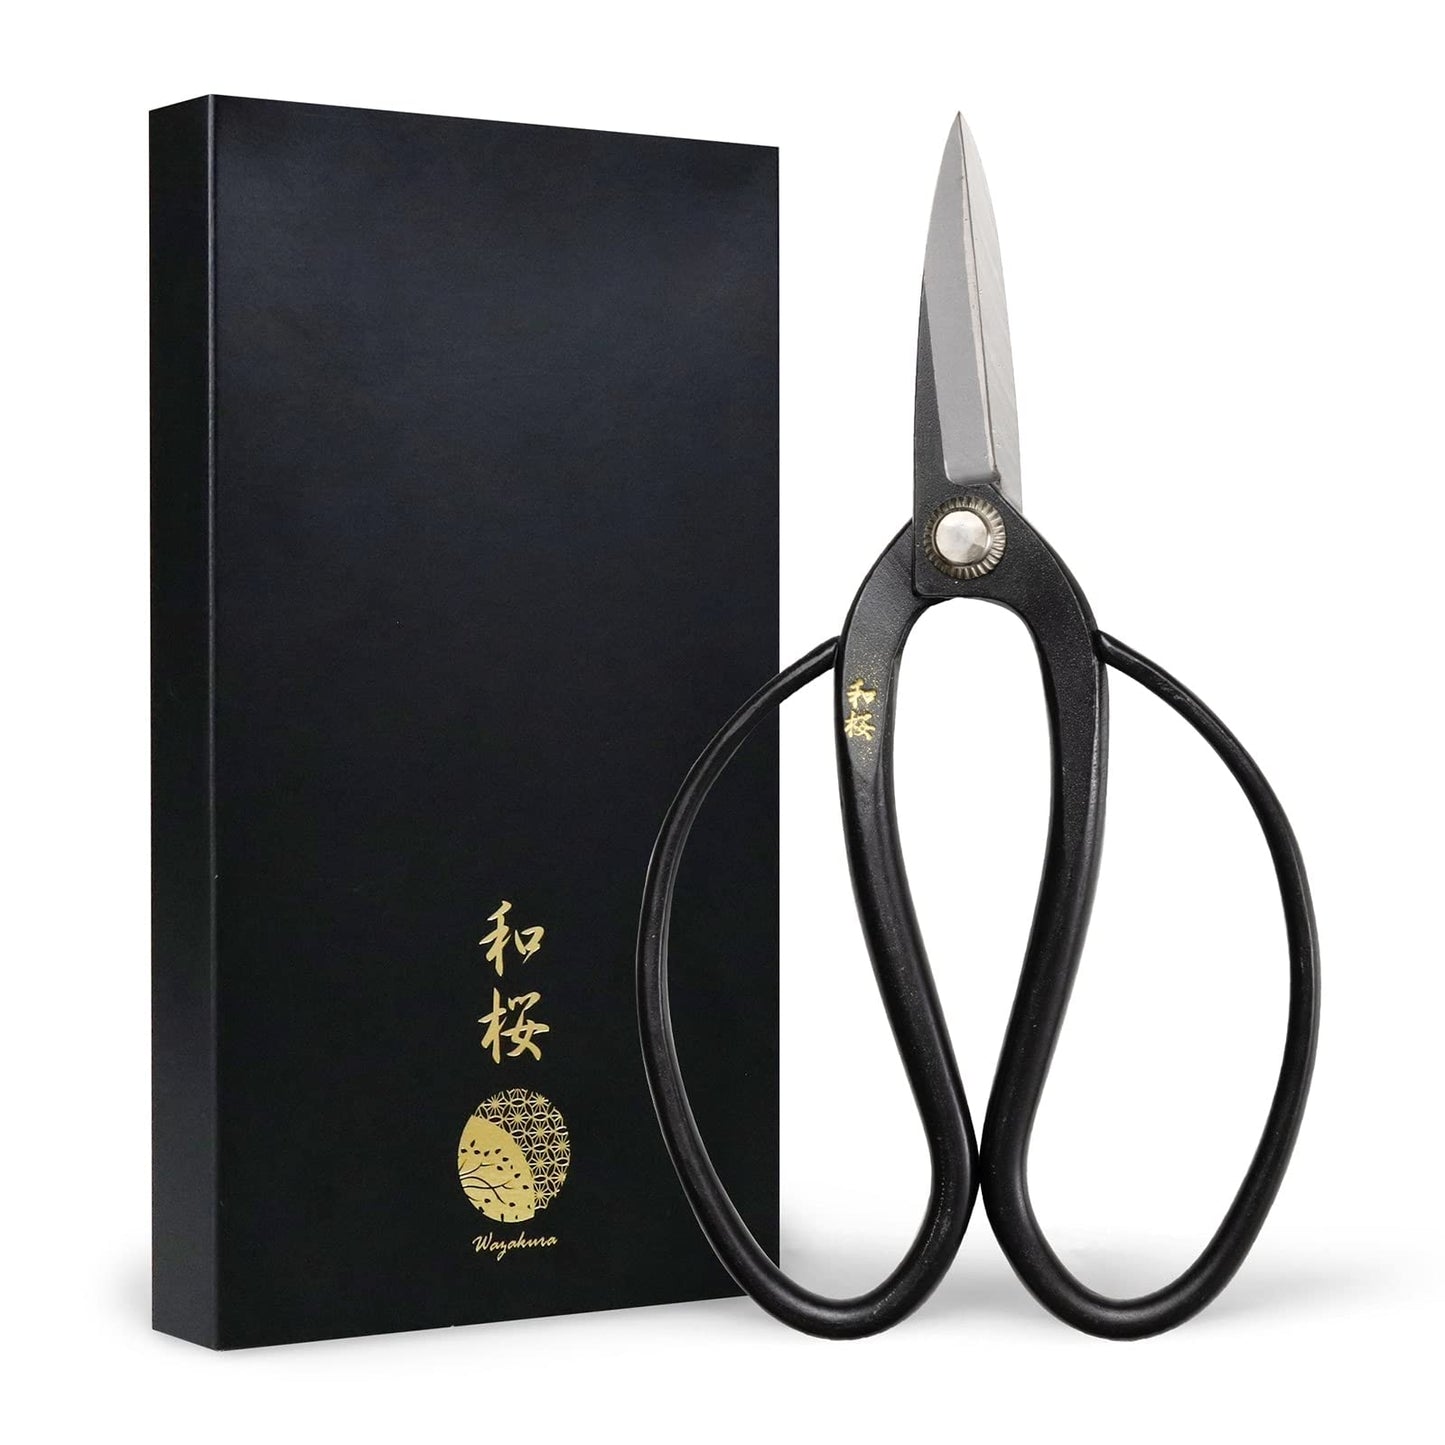 Traditional Japanese Bonsai Scissors 7 inch